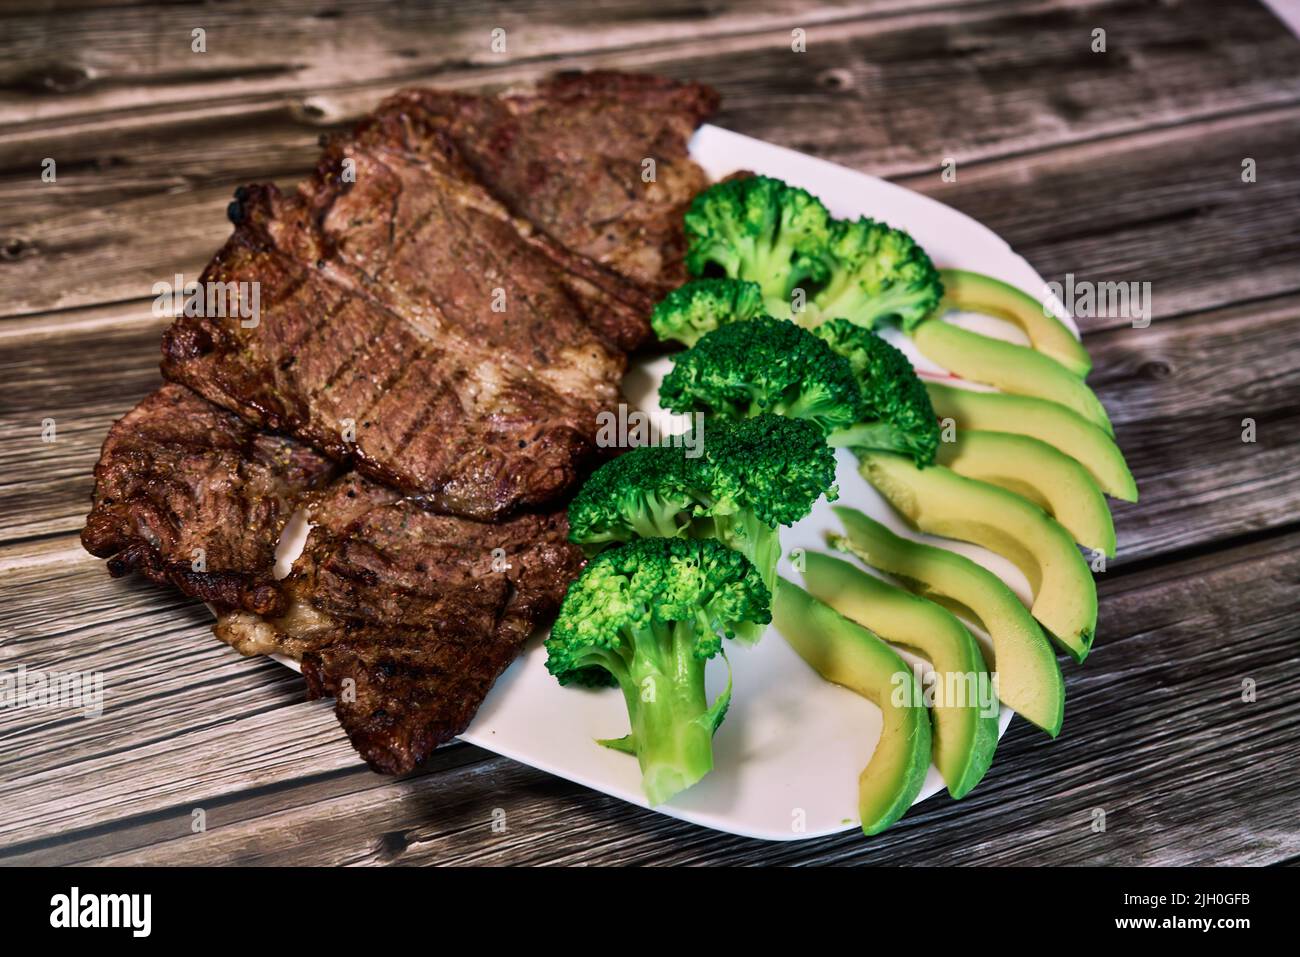 Keto diet based on beef steak, broccoli and avocado Stock Photo